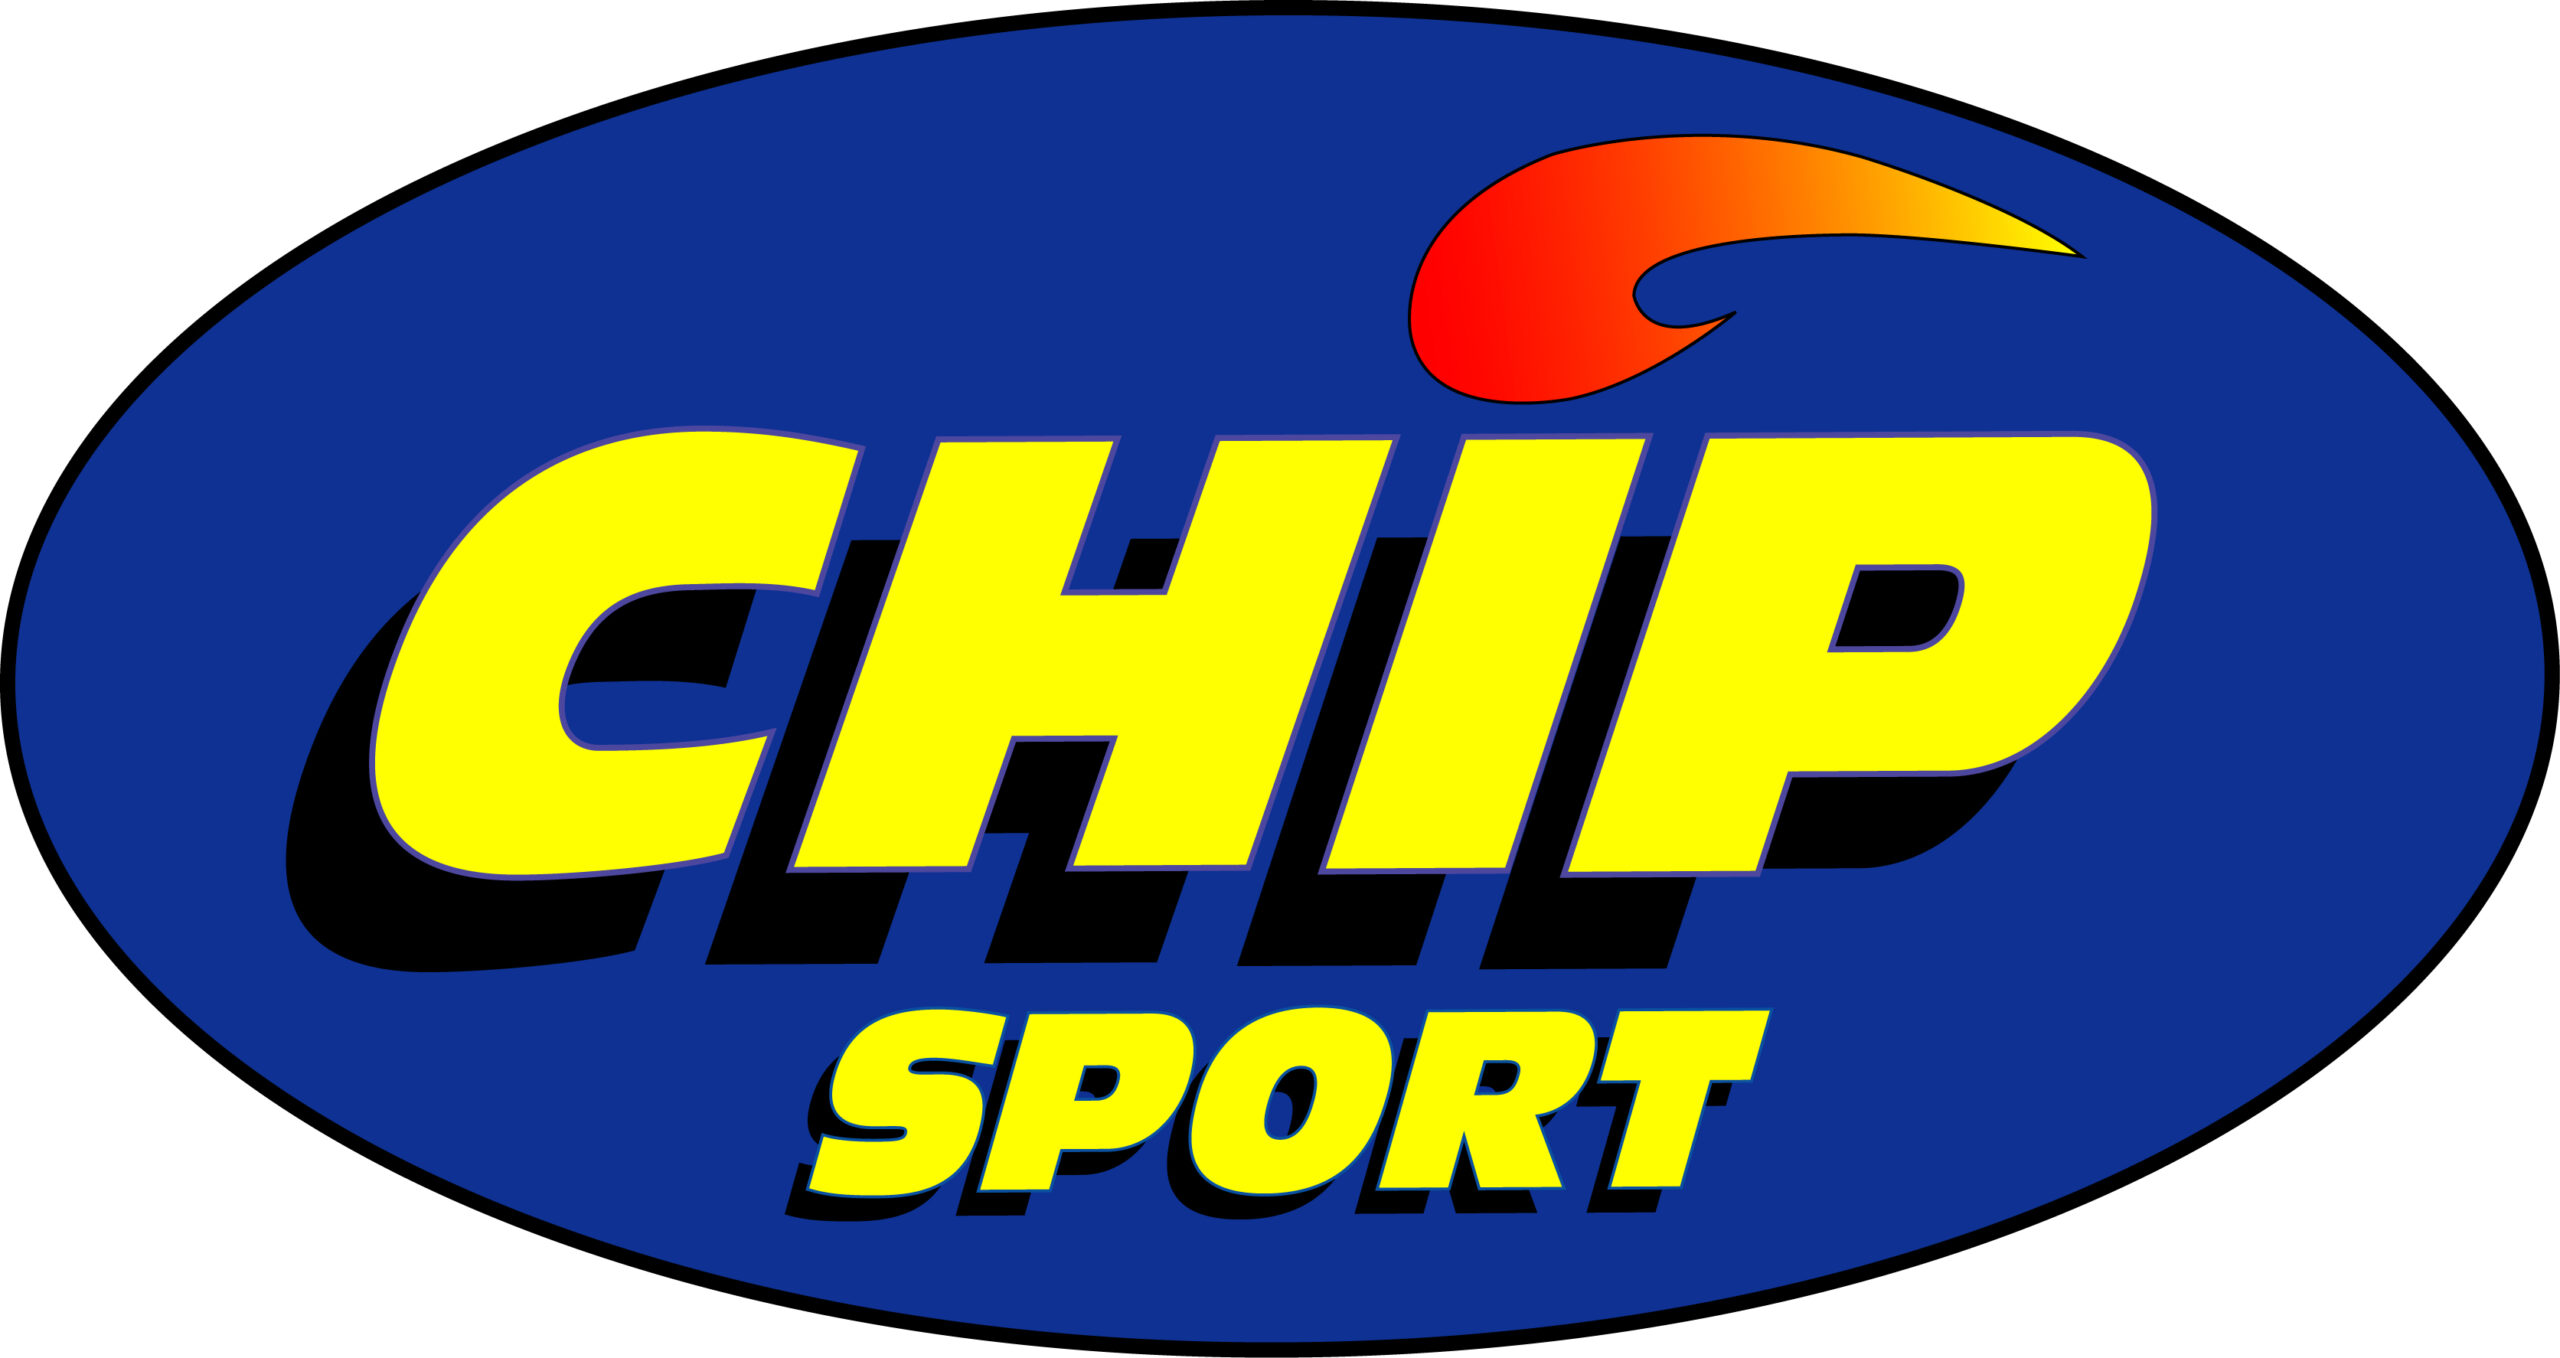 Chip Sport